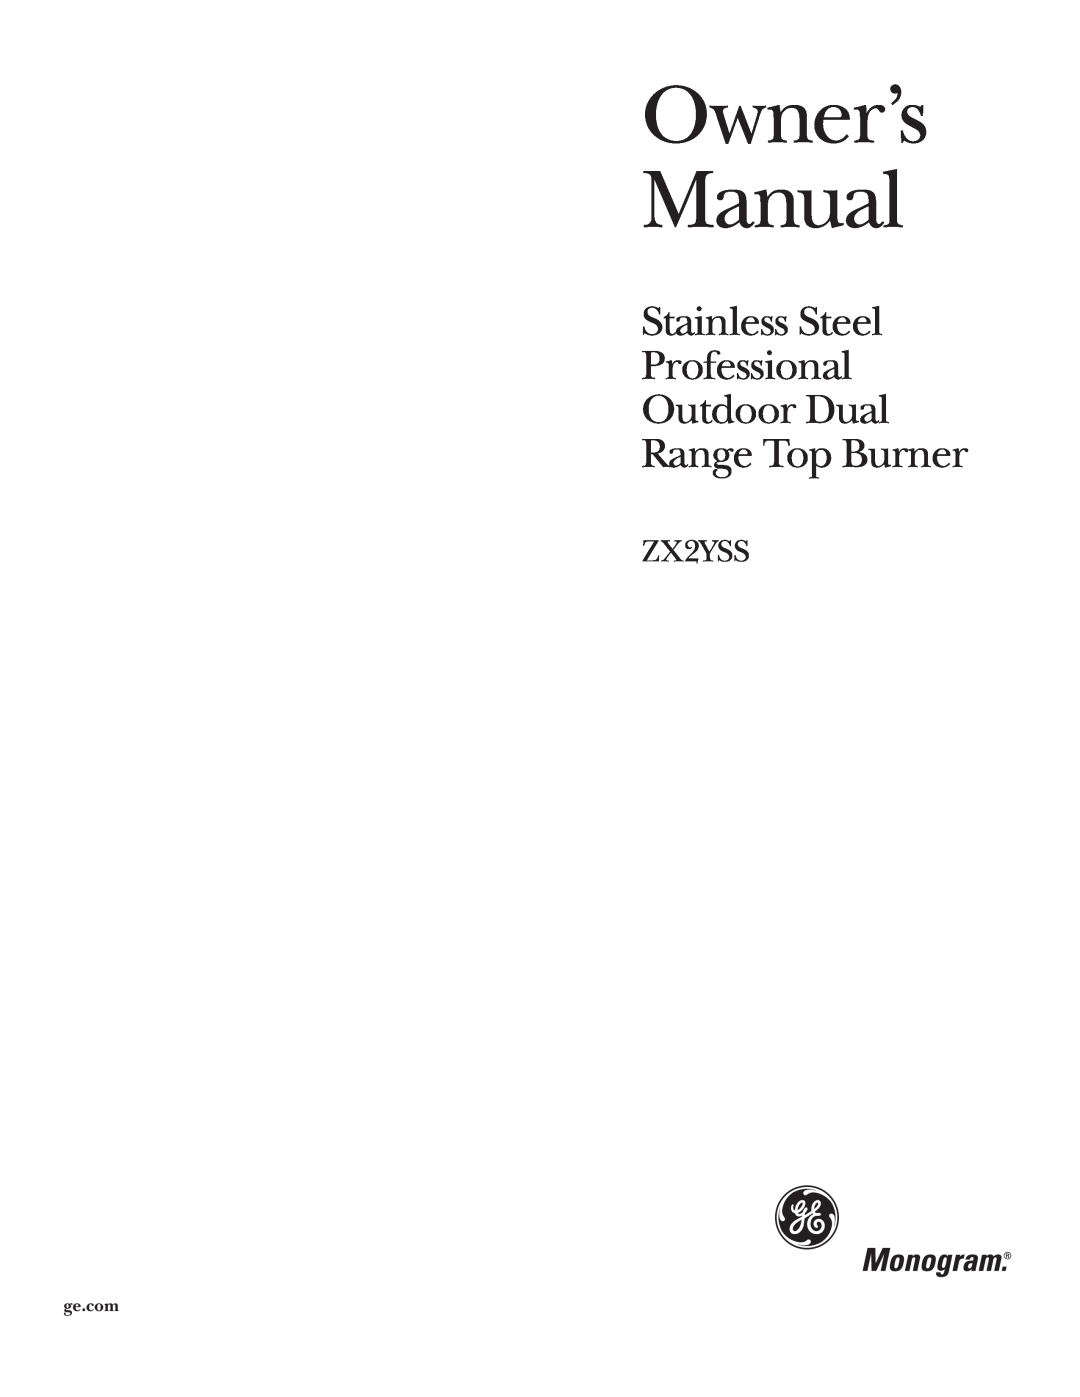 GE Monogram ZX2YSS owner manual Owner’s Manual, Stainless Steel Professional Outdoor Dual Range Top Burner, ge.com 